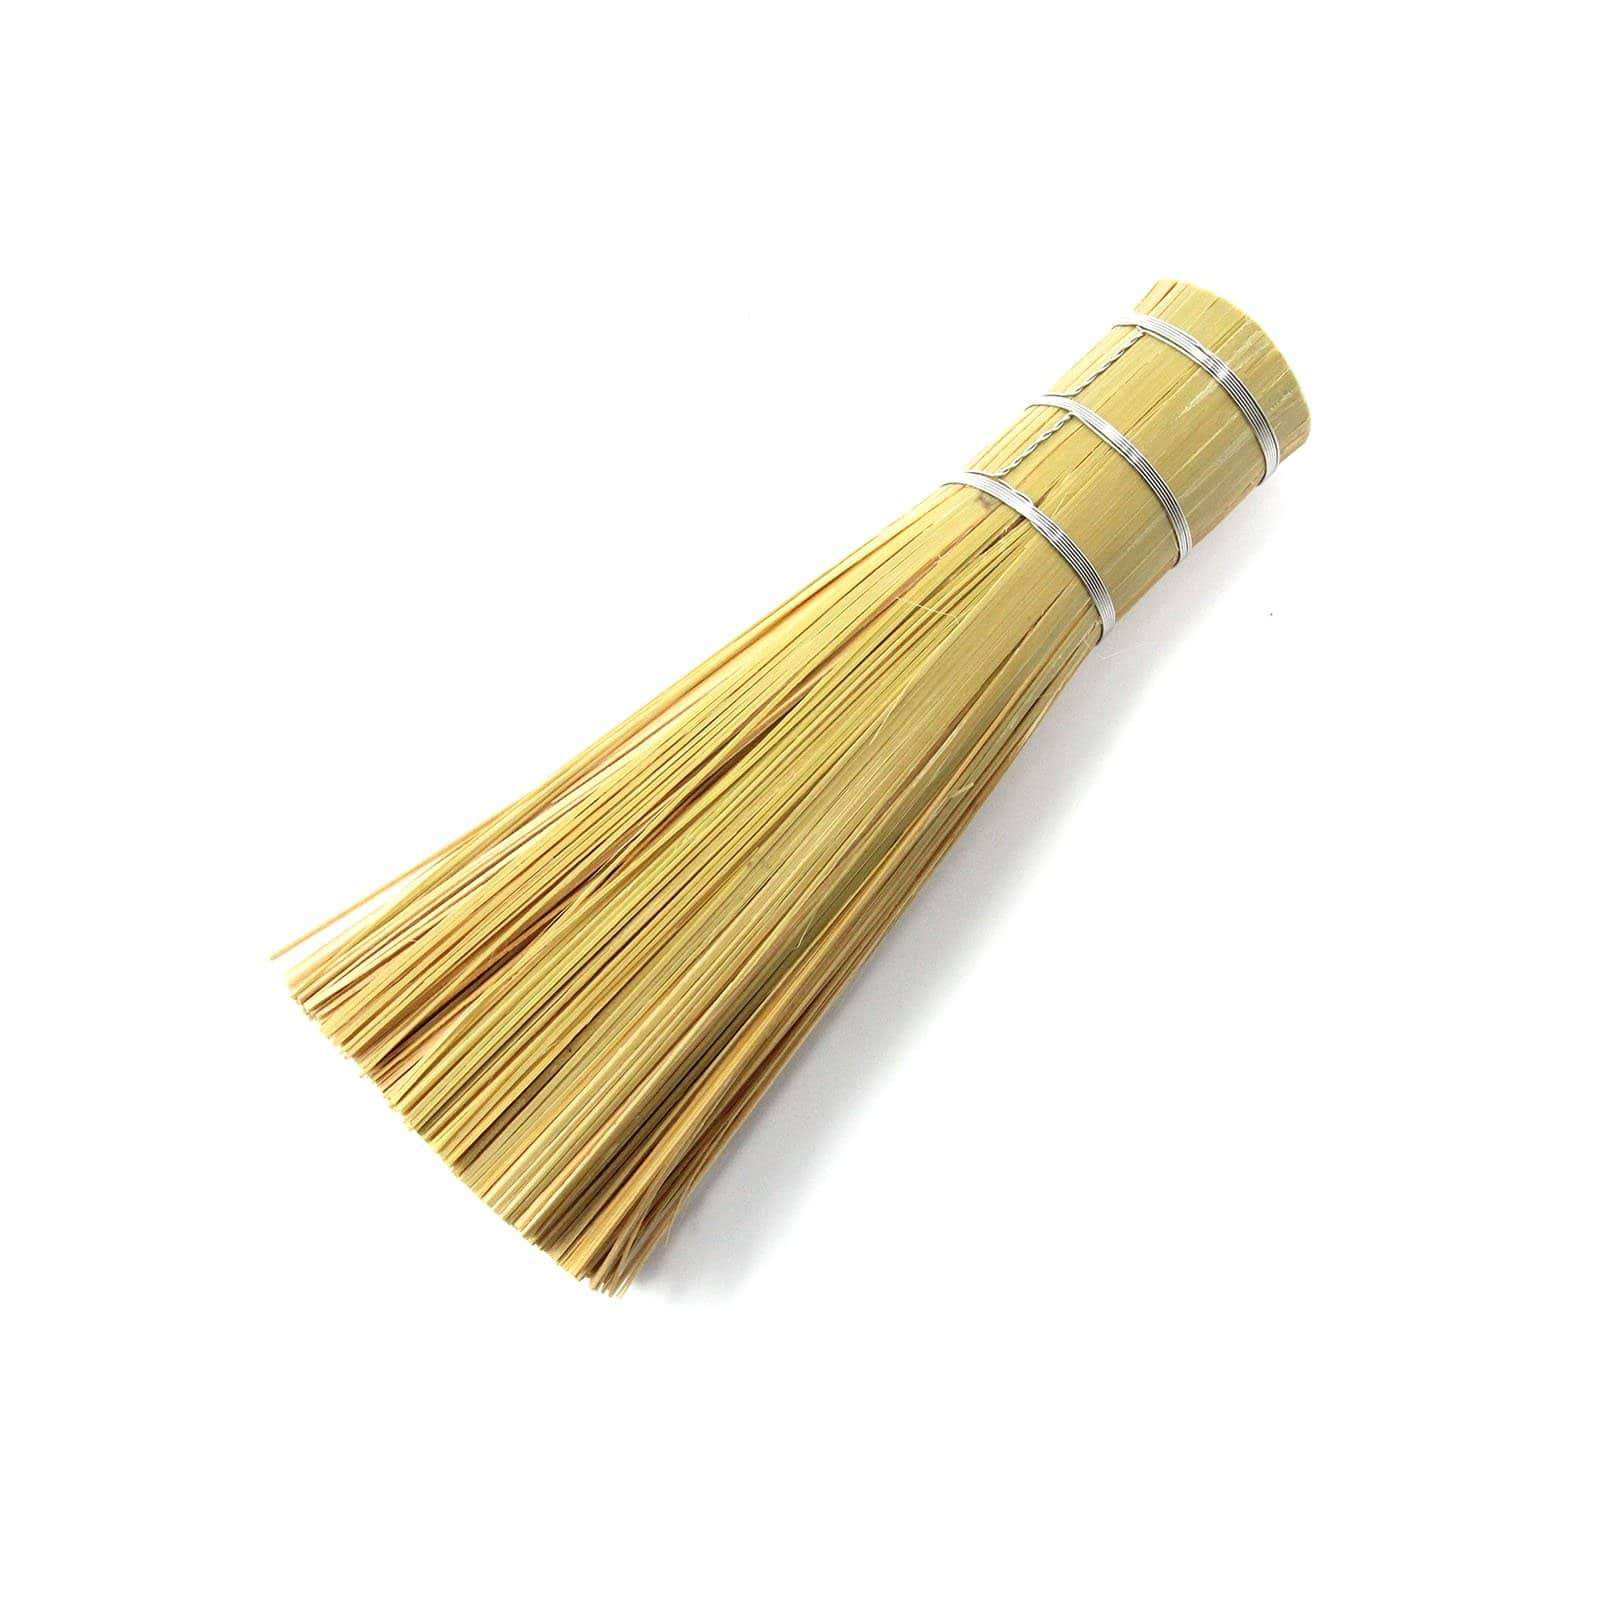 https://cdn.shopify.com/s/files/1/1610/3863/products/sasara-bamboo-scrubbing-brush-18cm-cleaning-brushes-6946995470419_1600x.jpg?v=1564029763